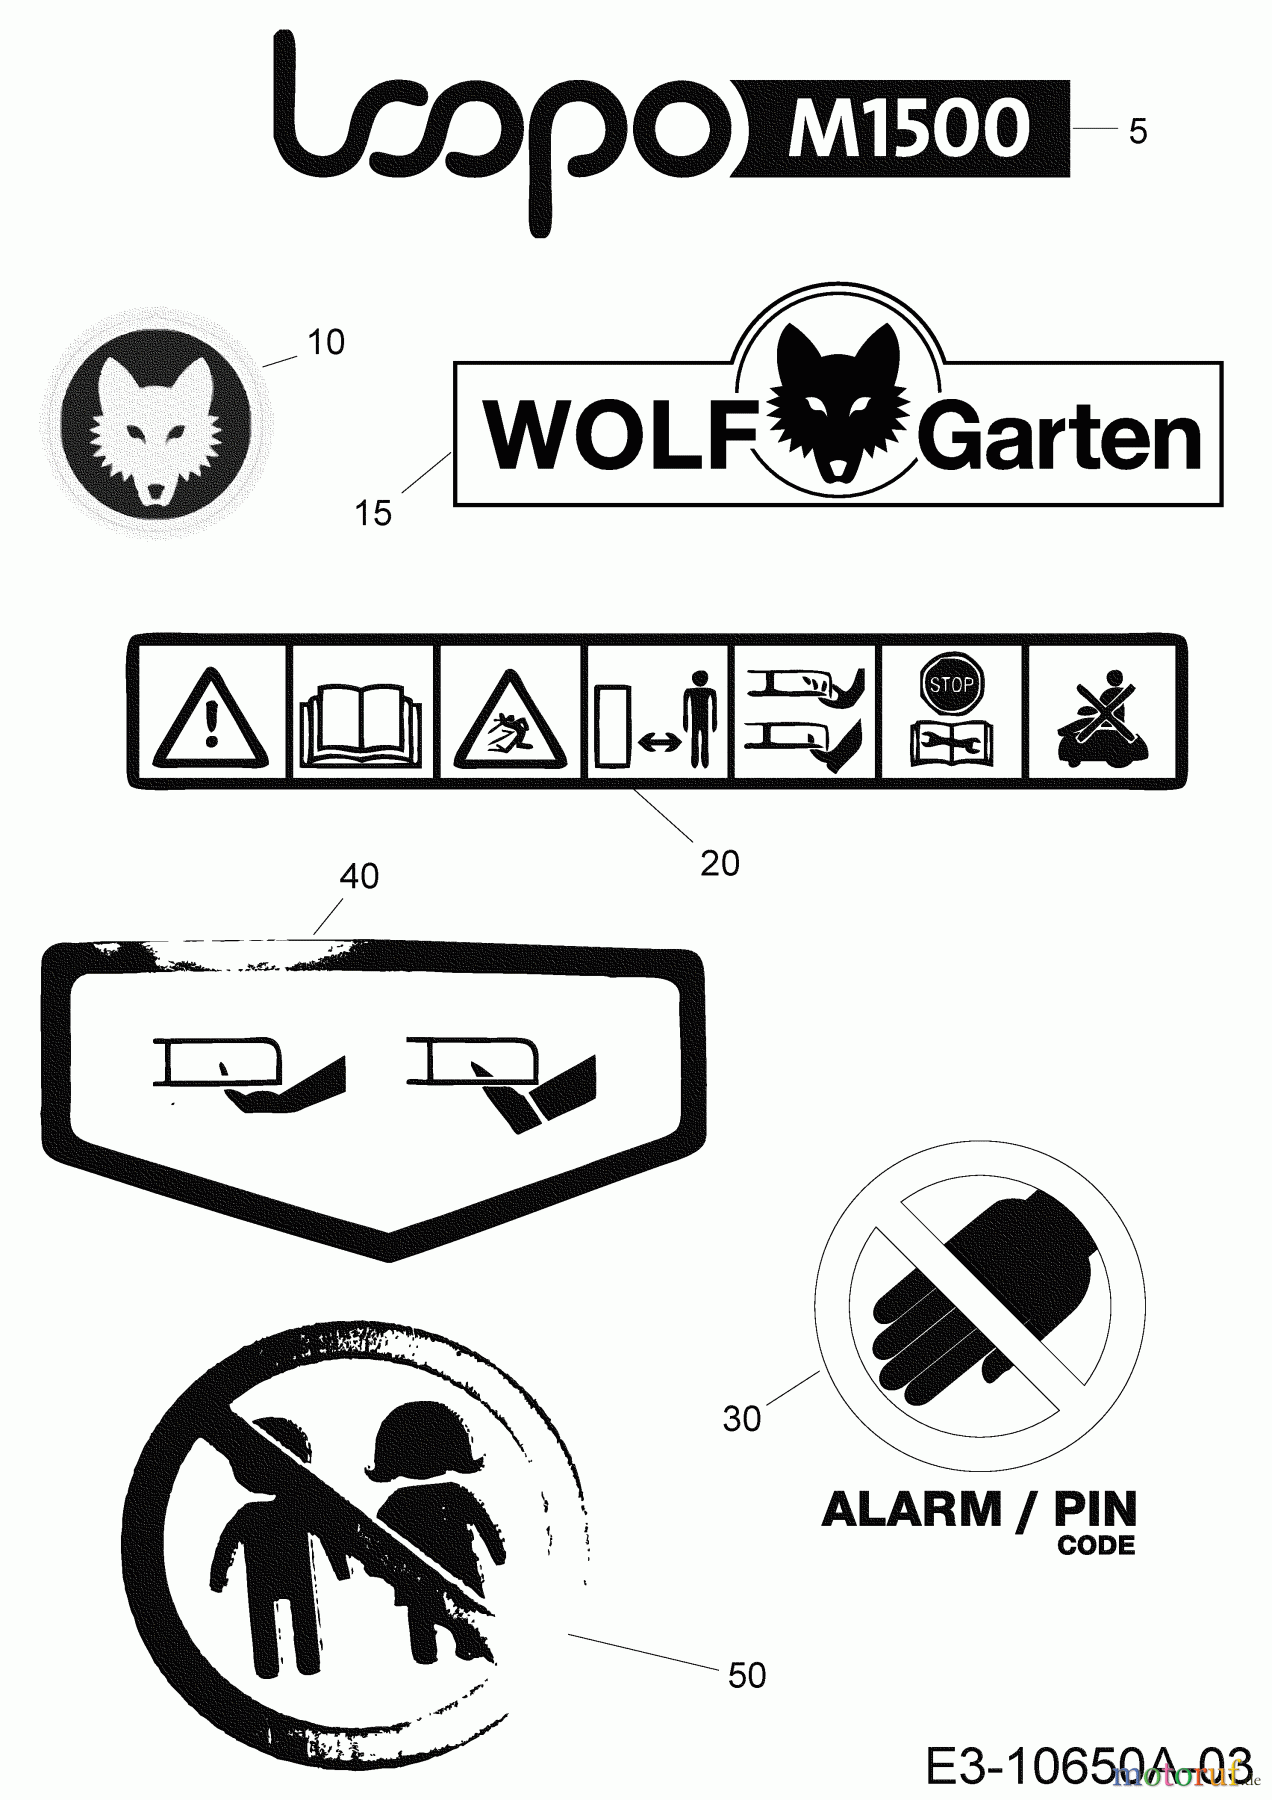  Wolf-Garten Robotic lawn mower Loopo M1500 22BCDAEA650 (2020) Labels